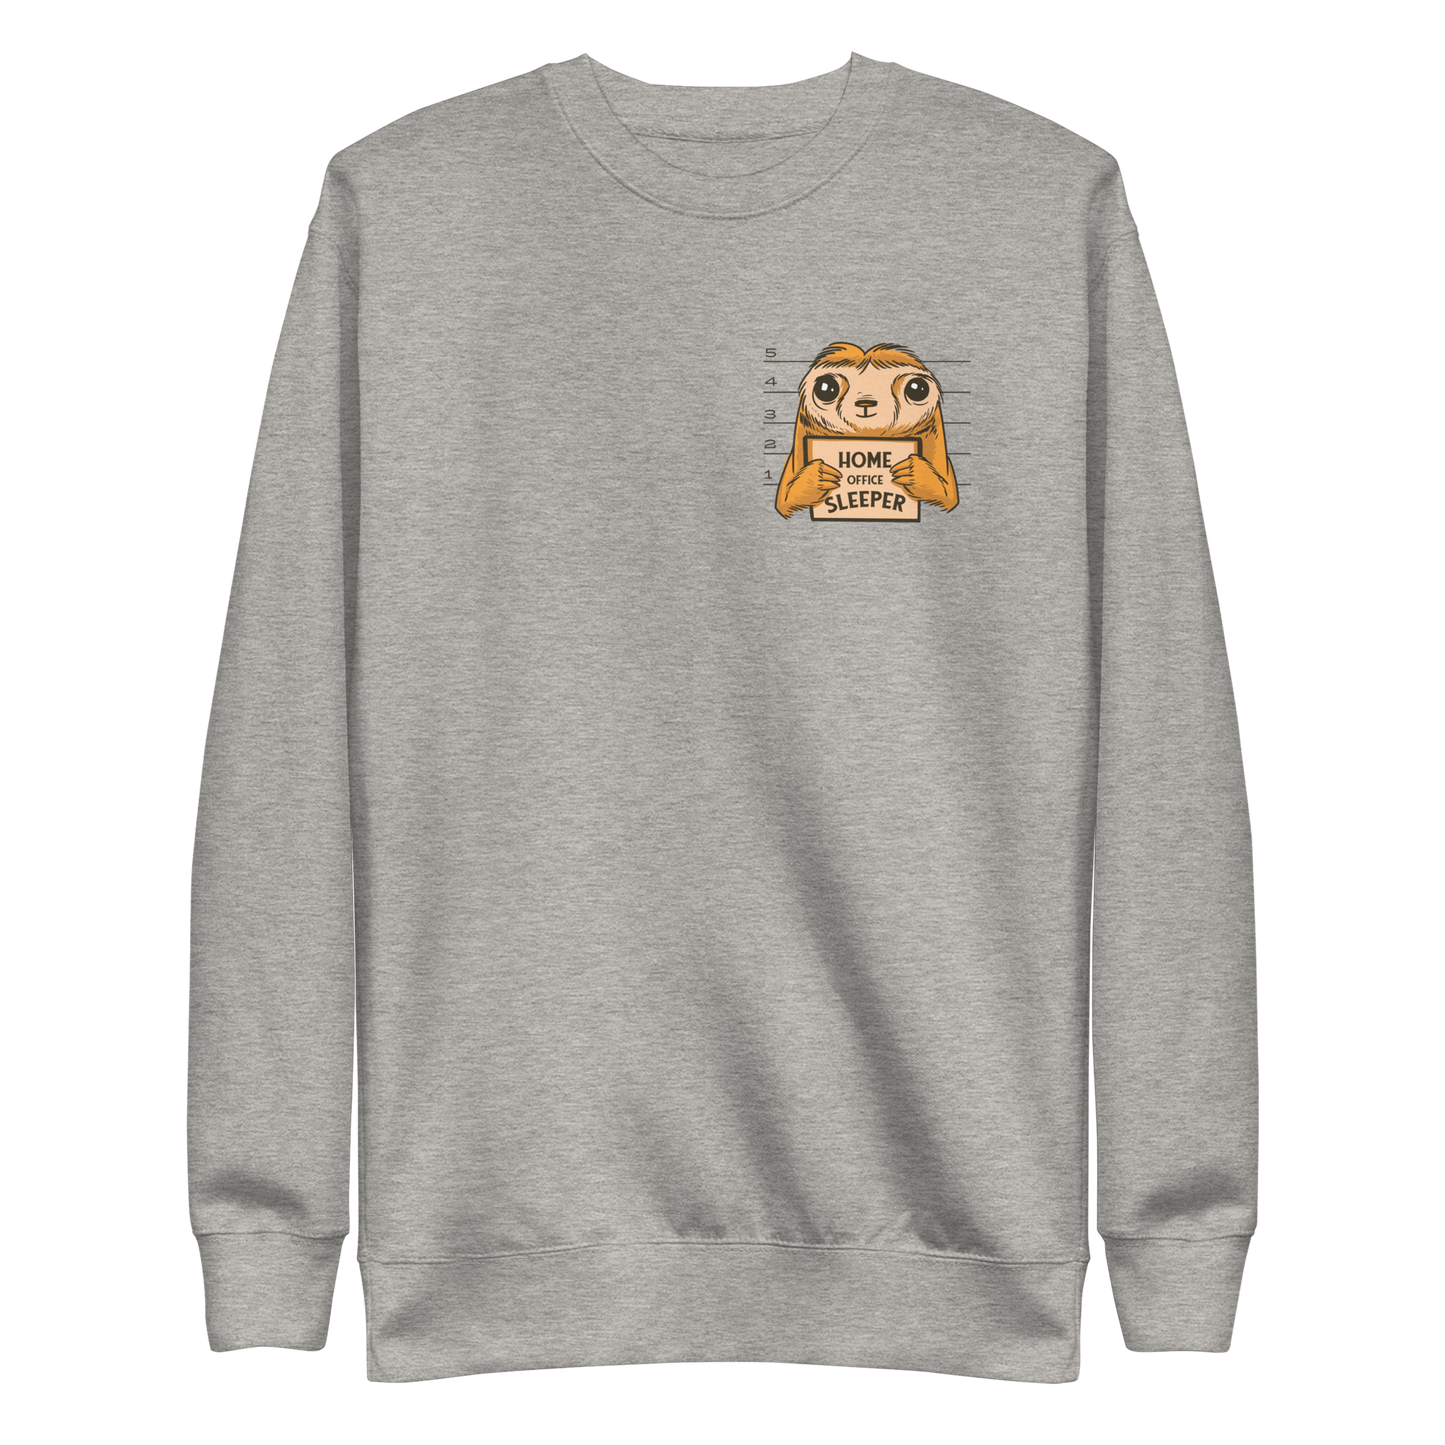 Home office sloth | Unisex Premium Sweatshirt